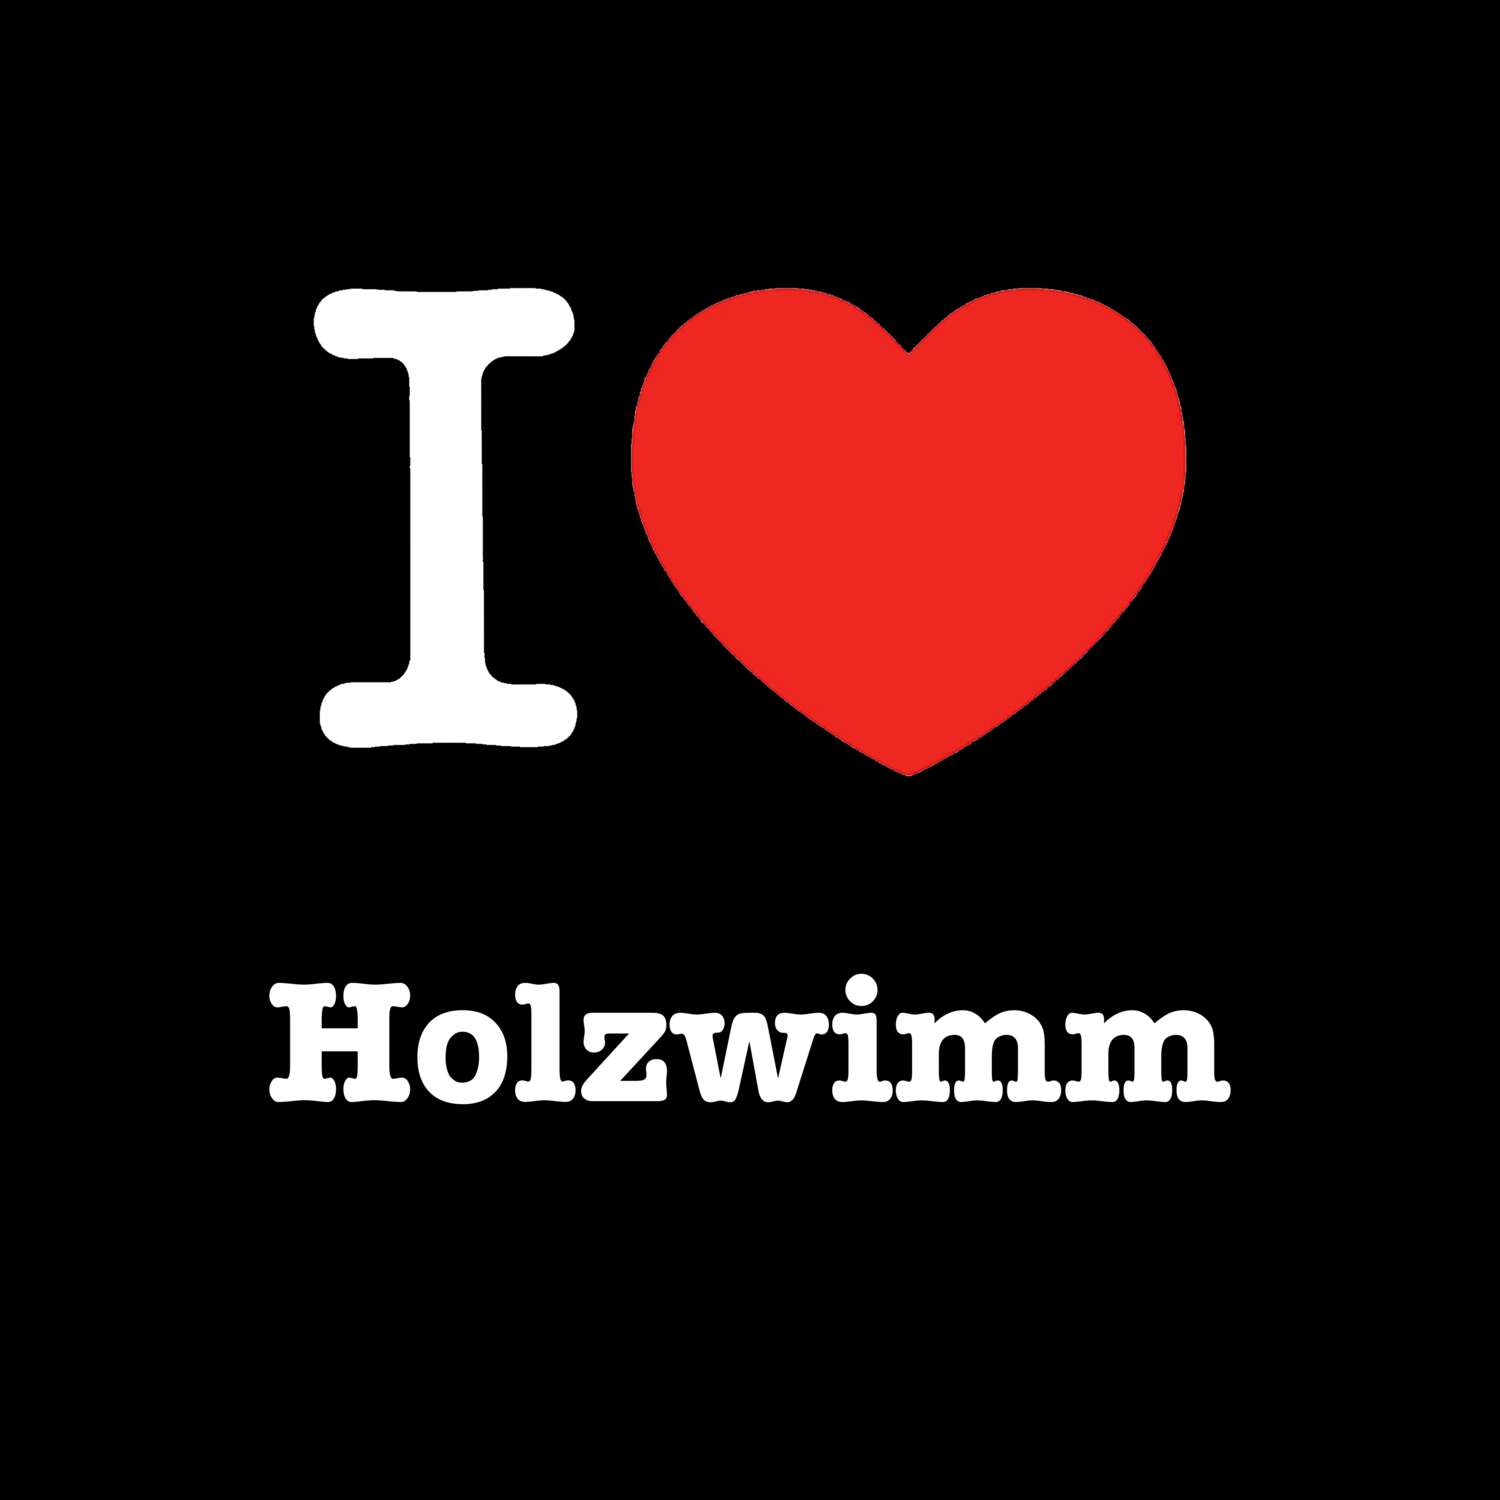 Holzwimm T-Shirt »I love«